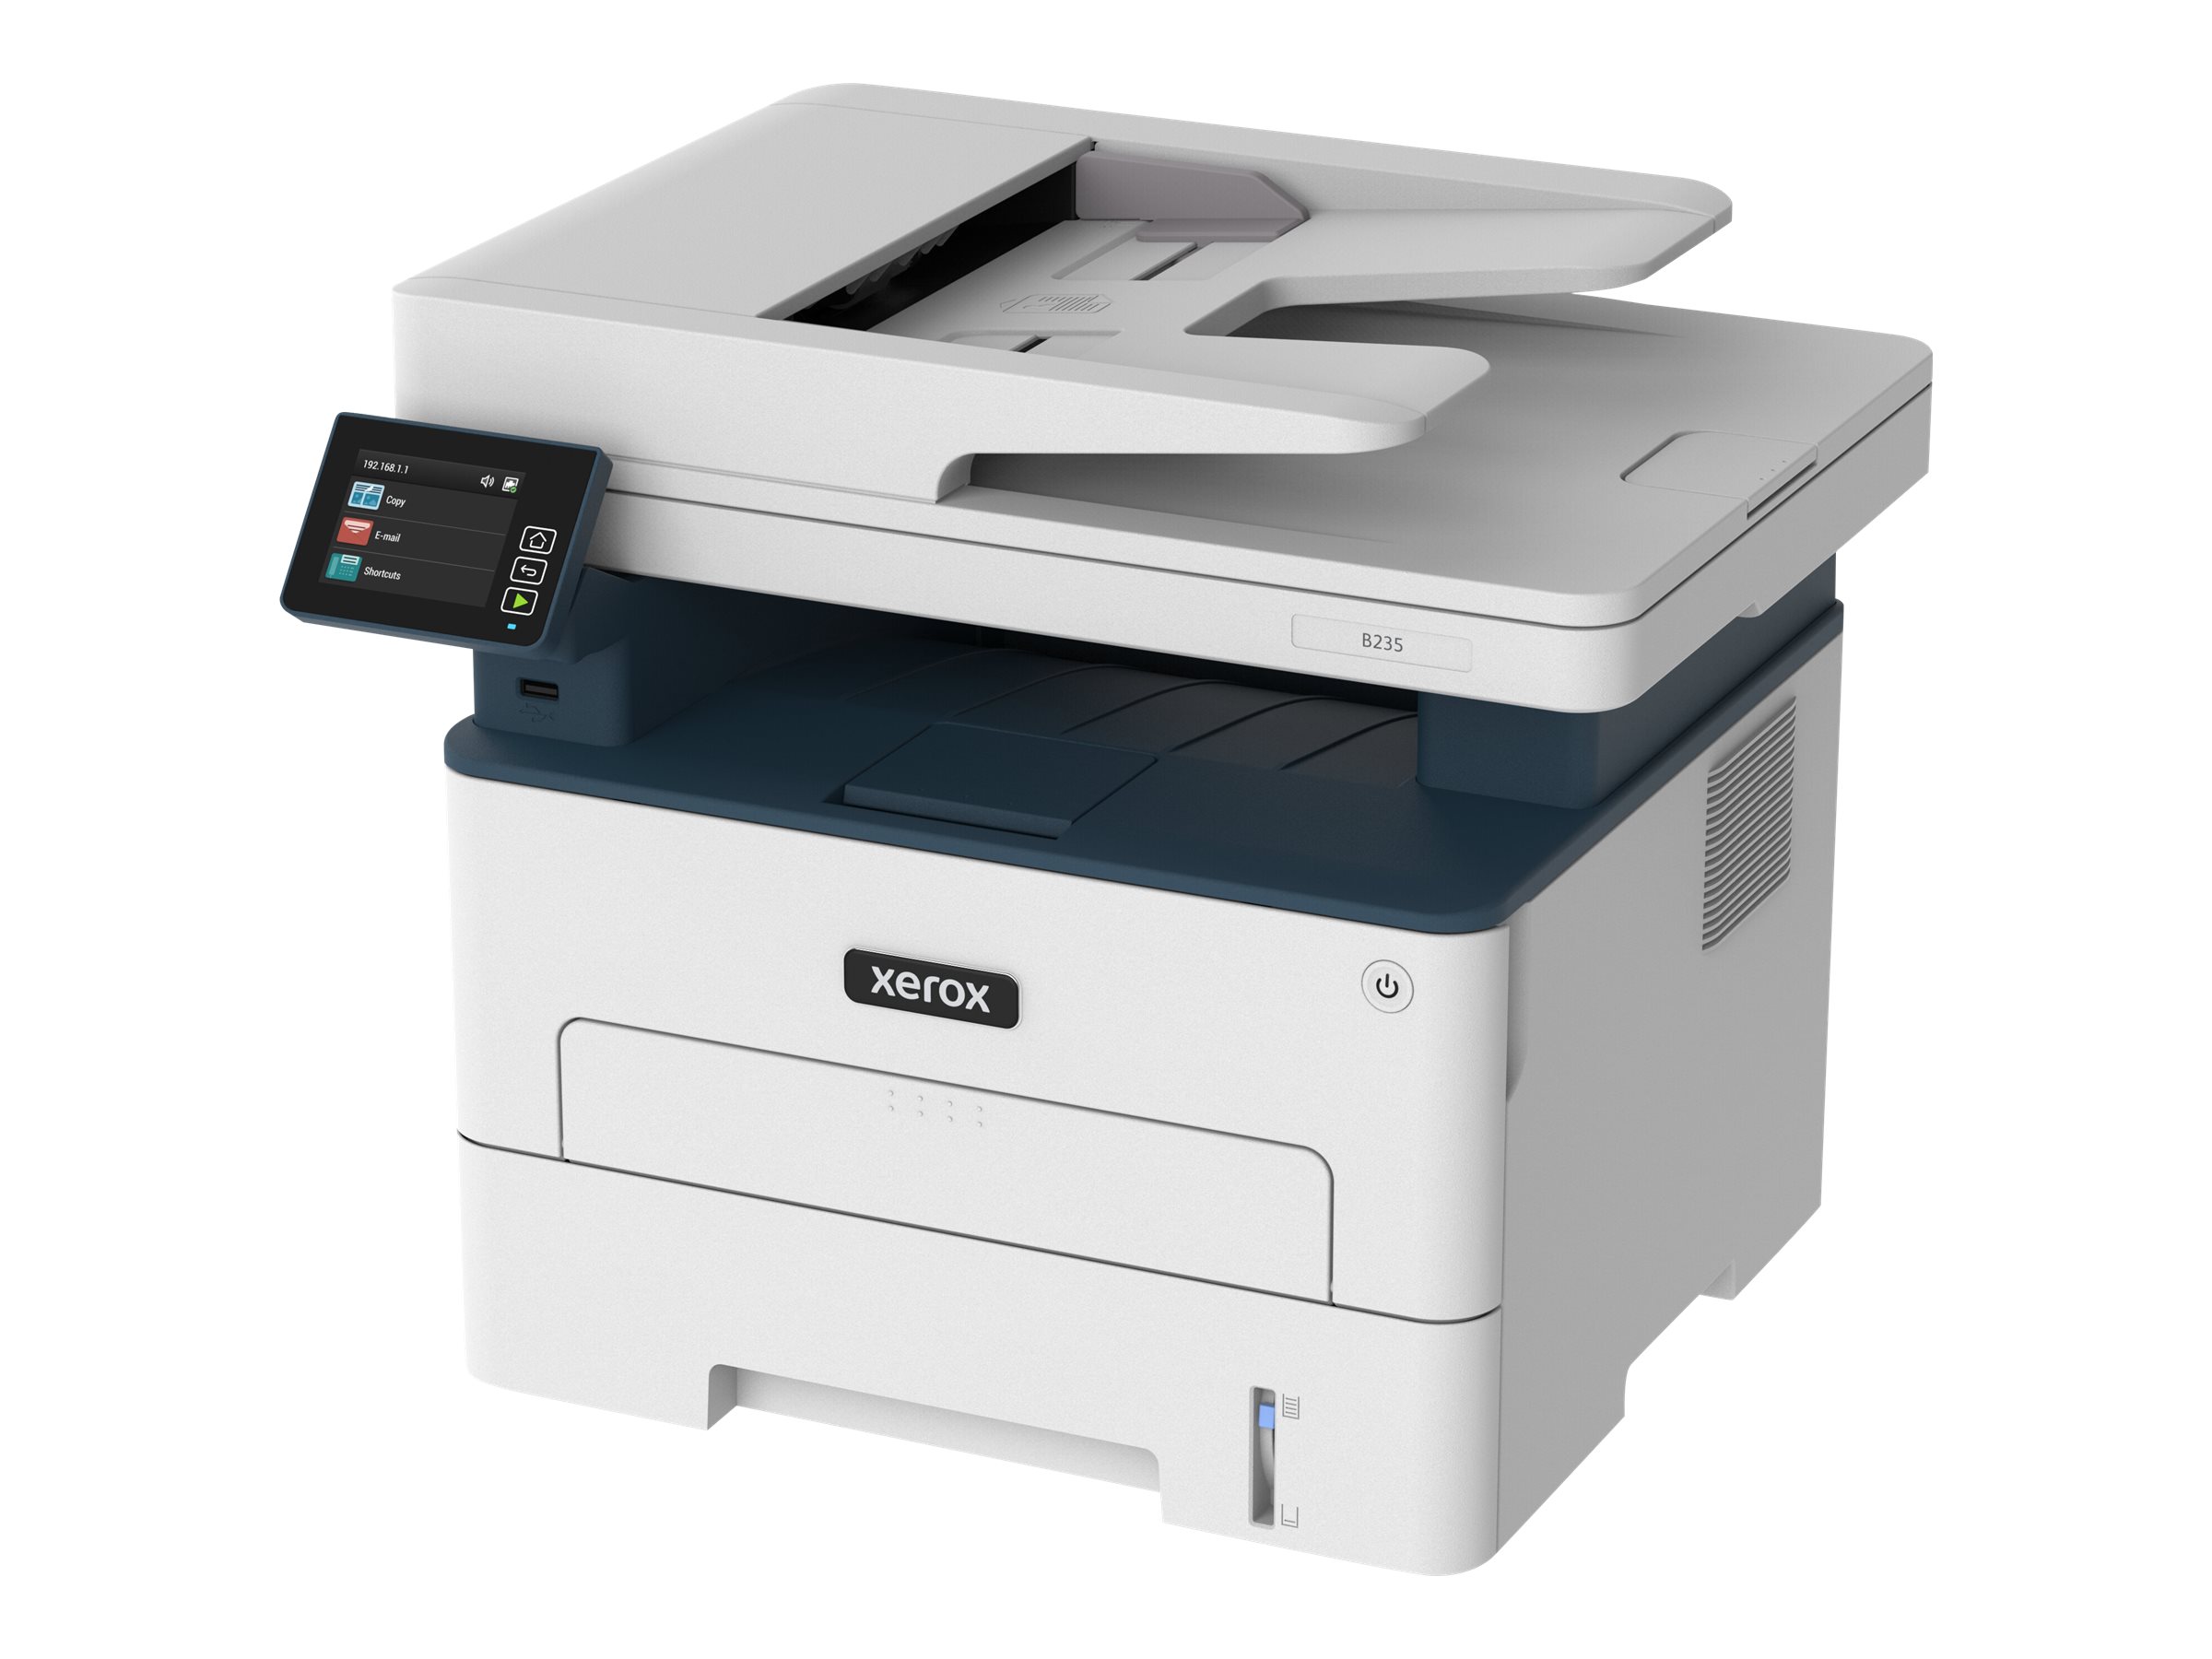 Xerox B235/DNI - Multifunction printer